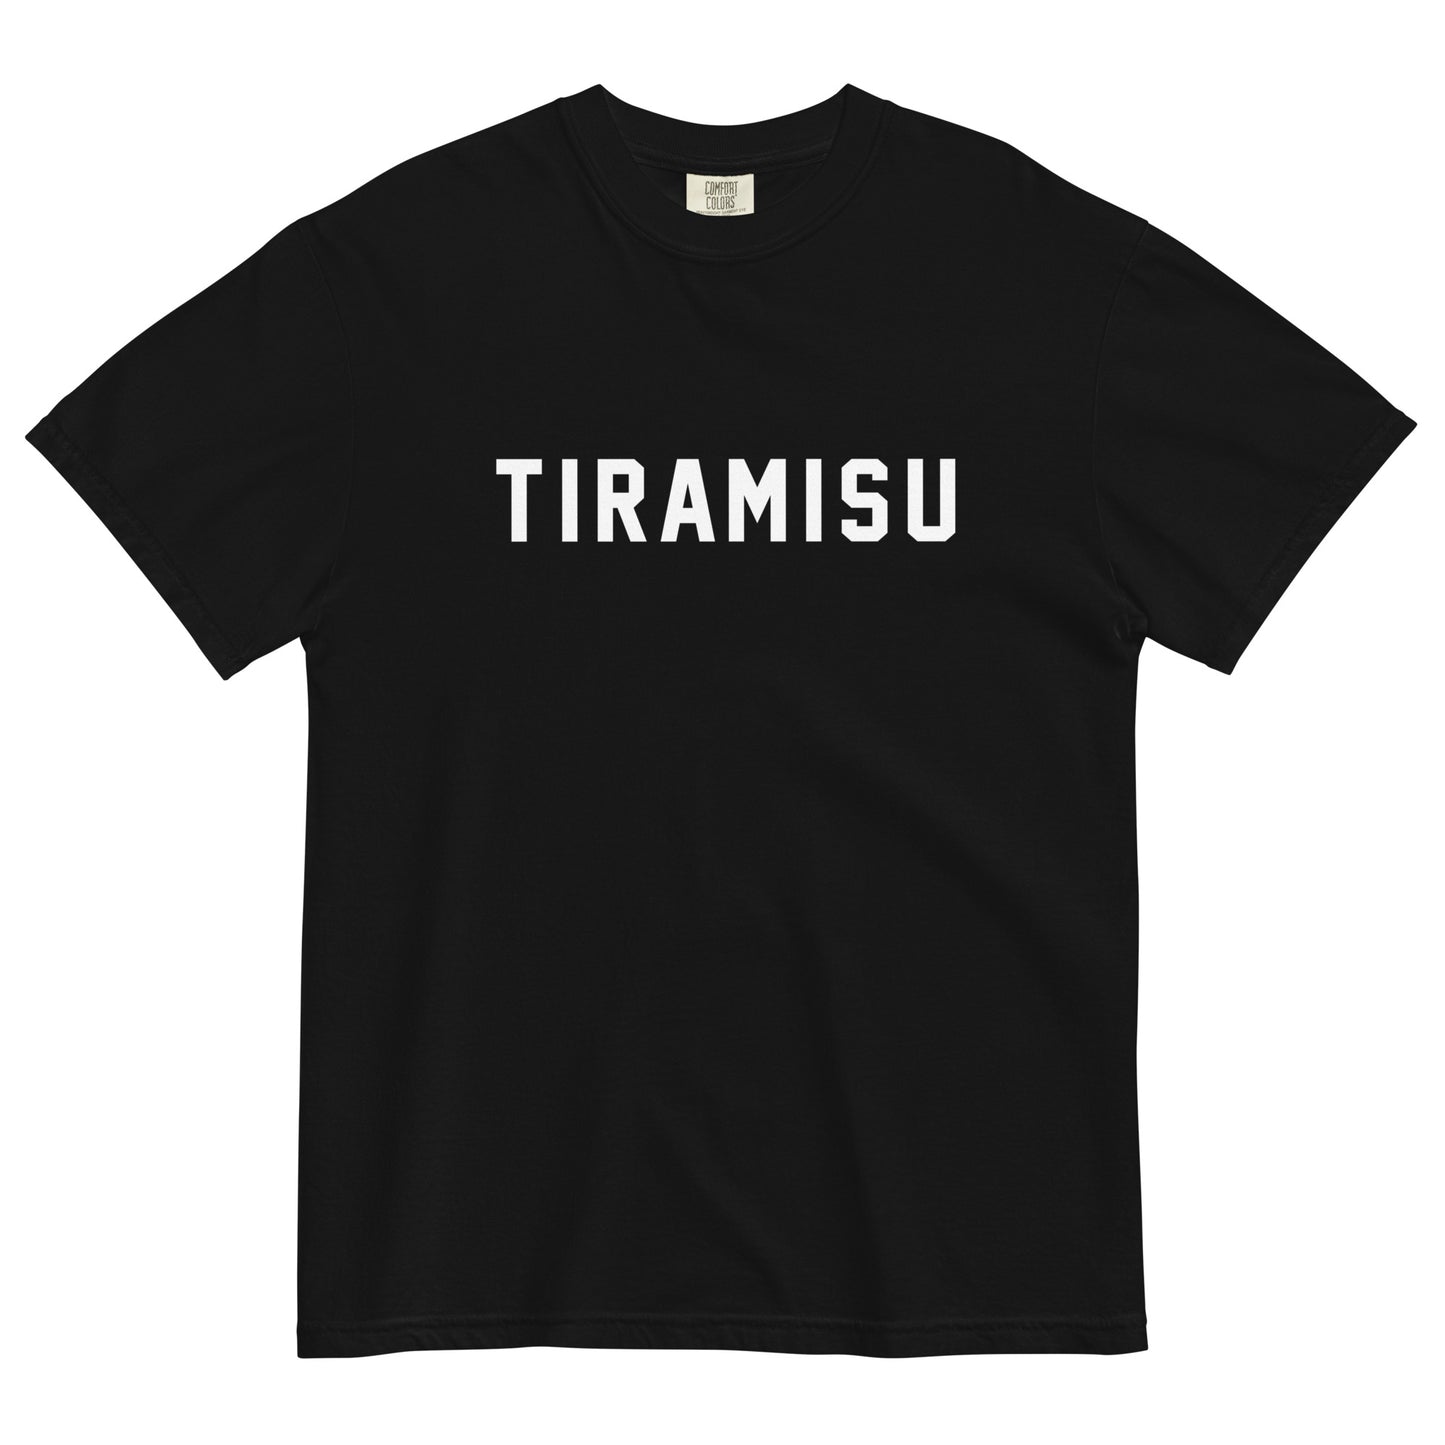 TIRAMISU